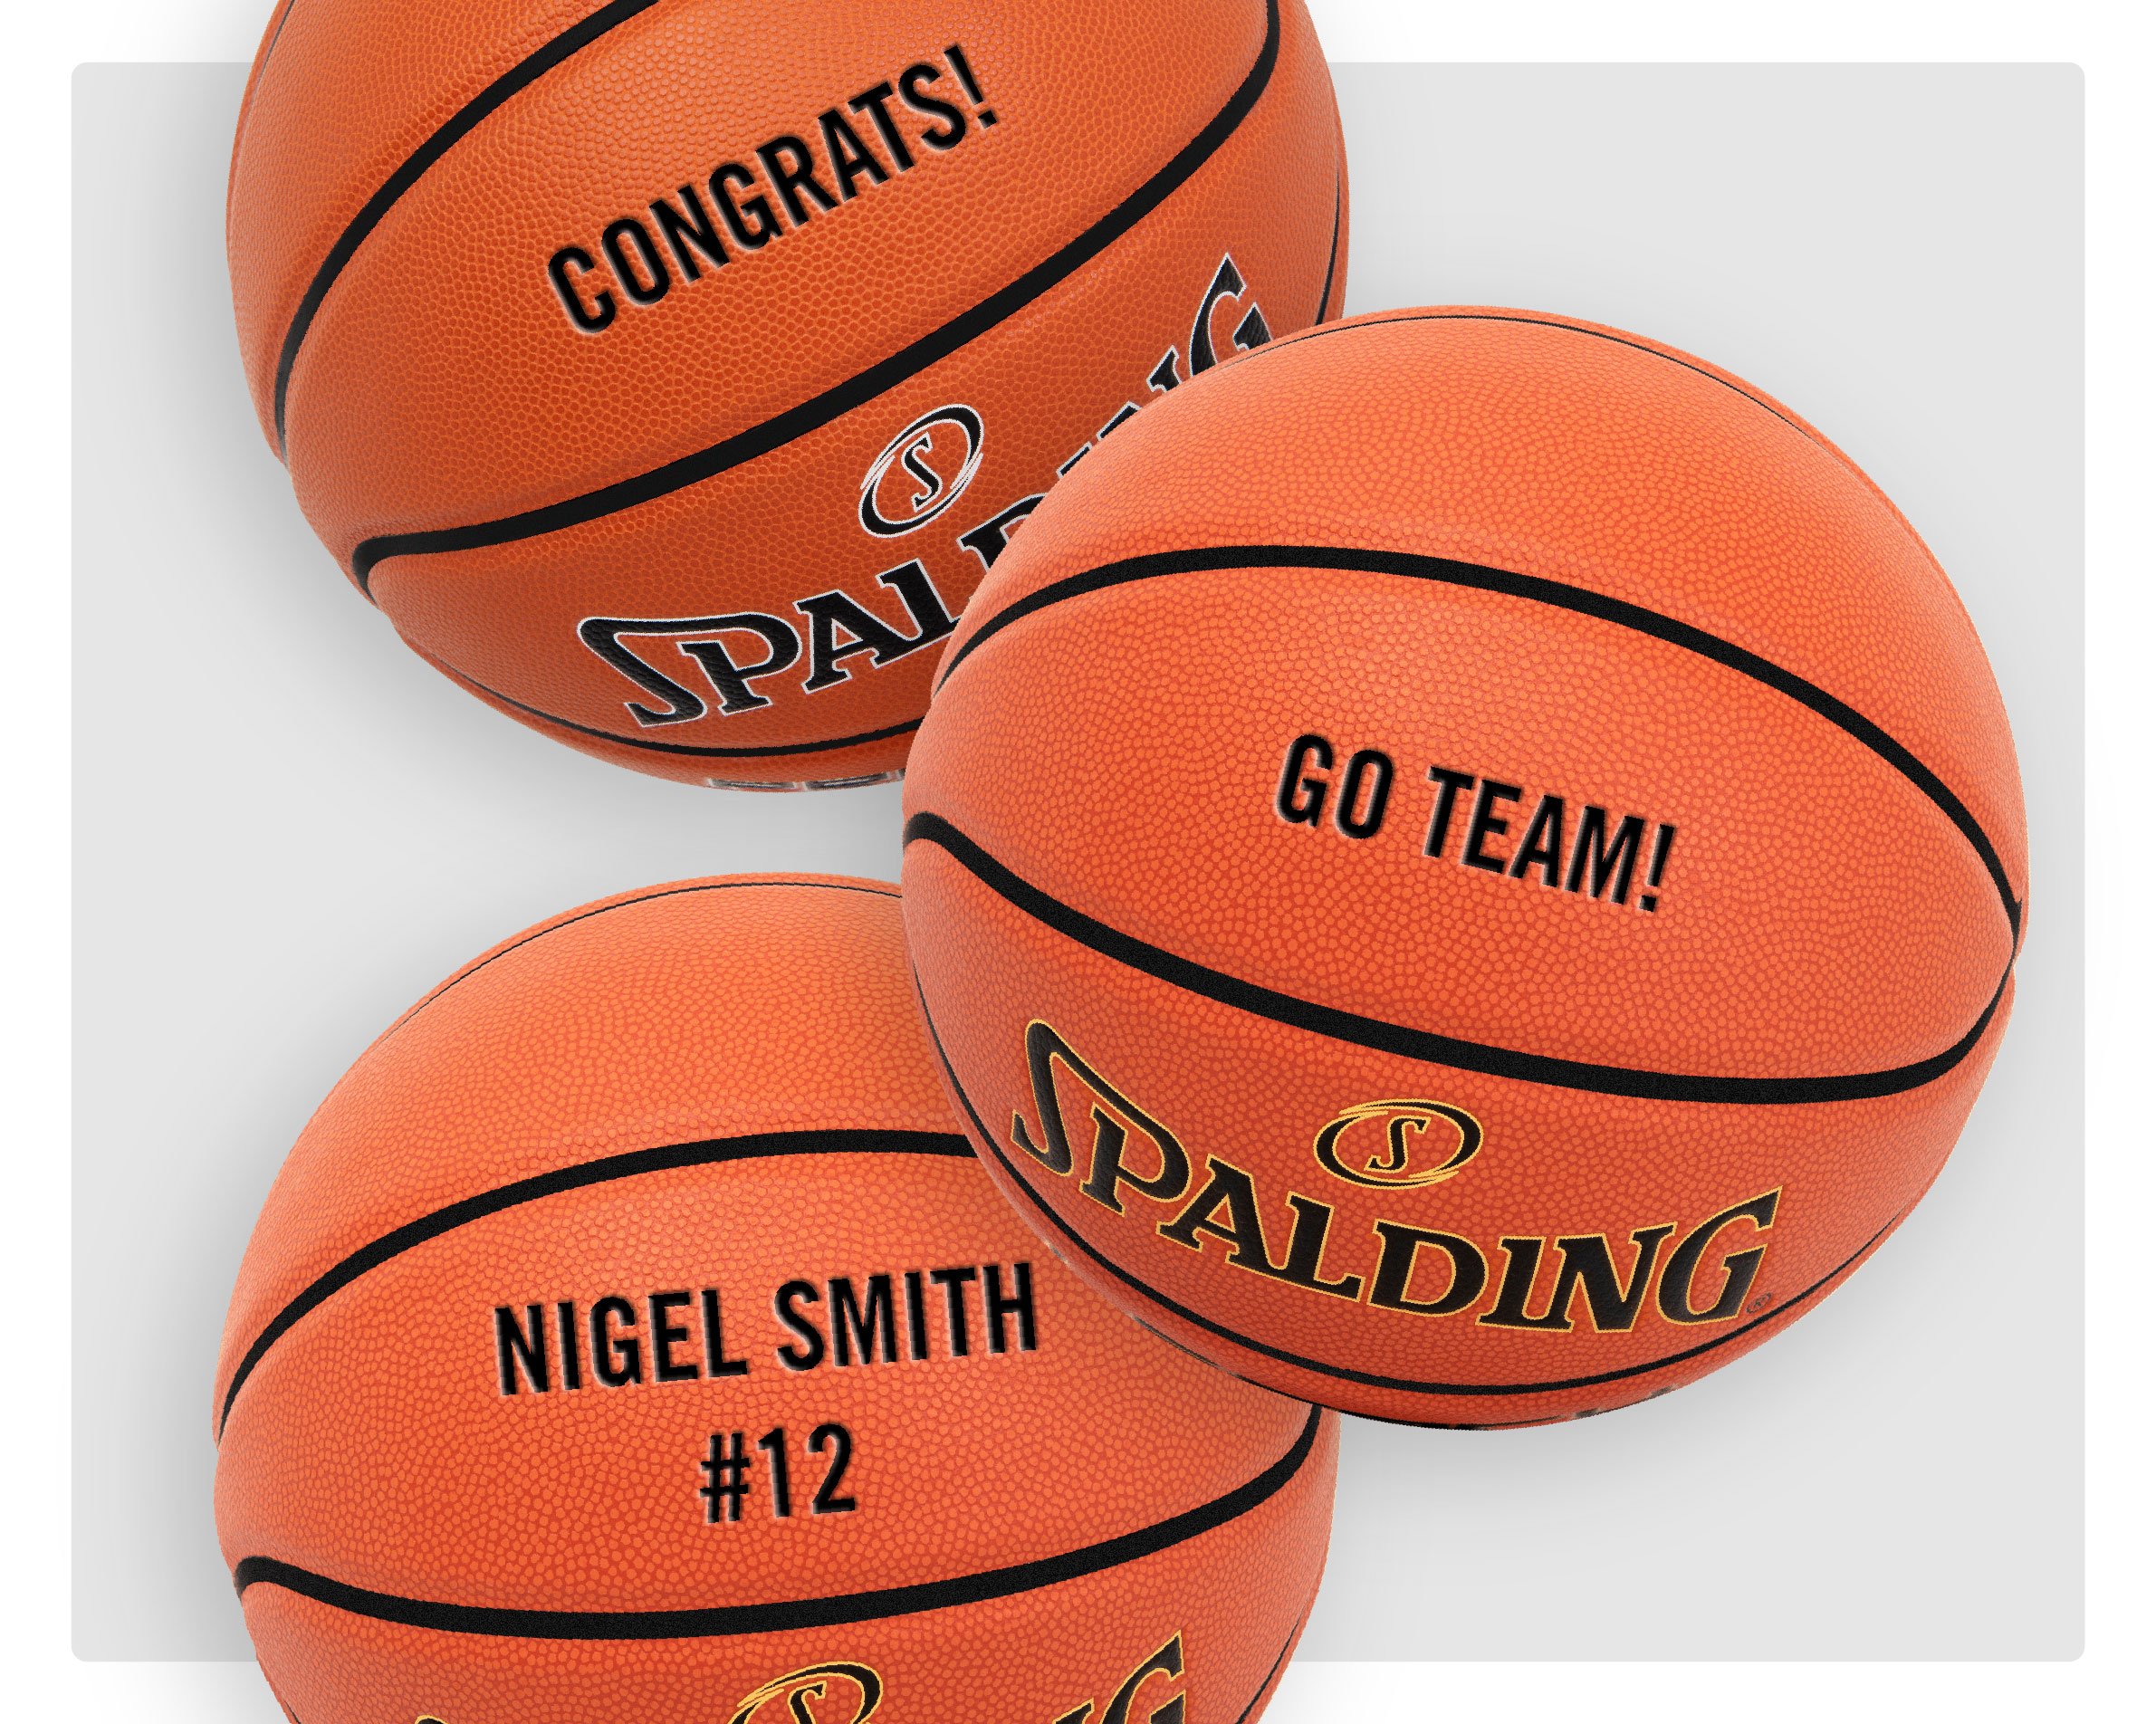   Orange Spalding basketballs with custom text examples. Go Team! Nigel Smith #12 Congrats!